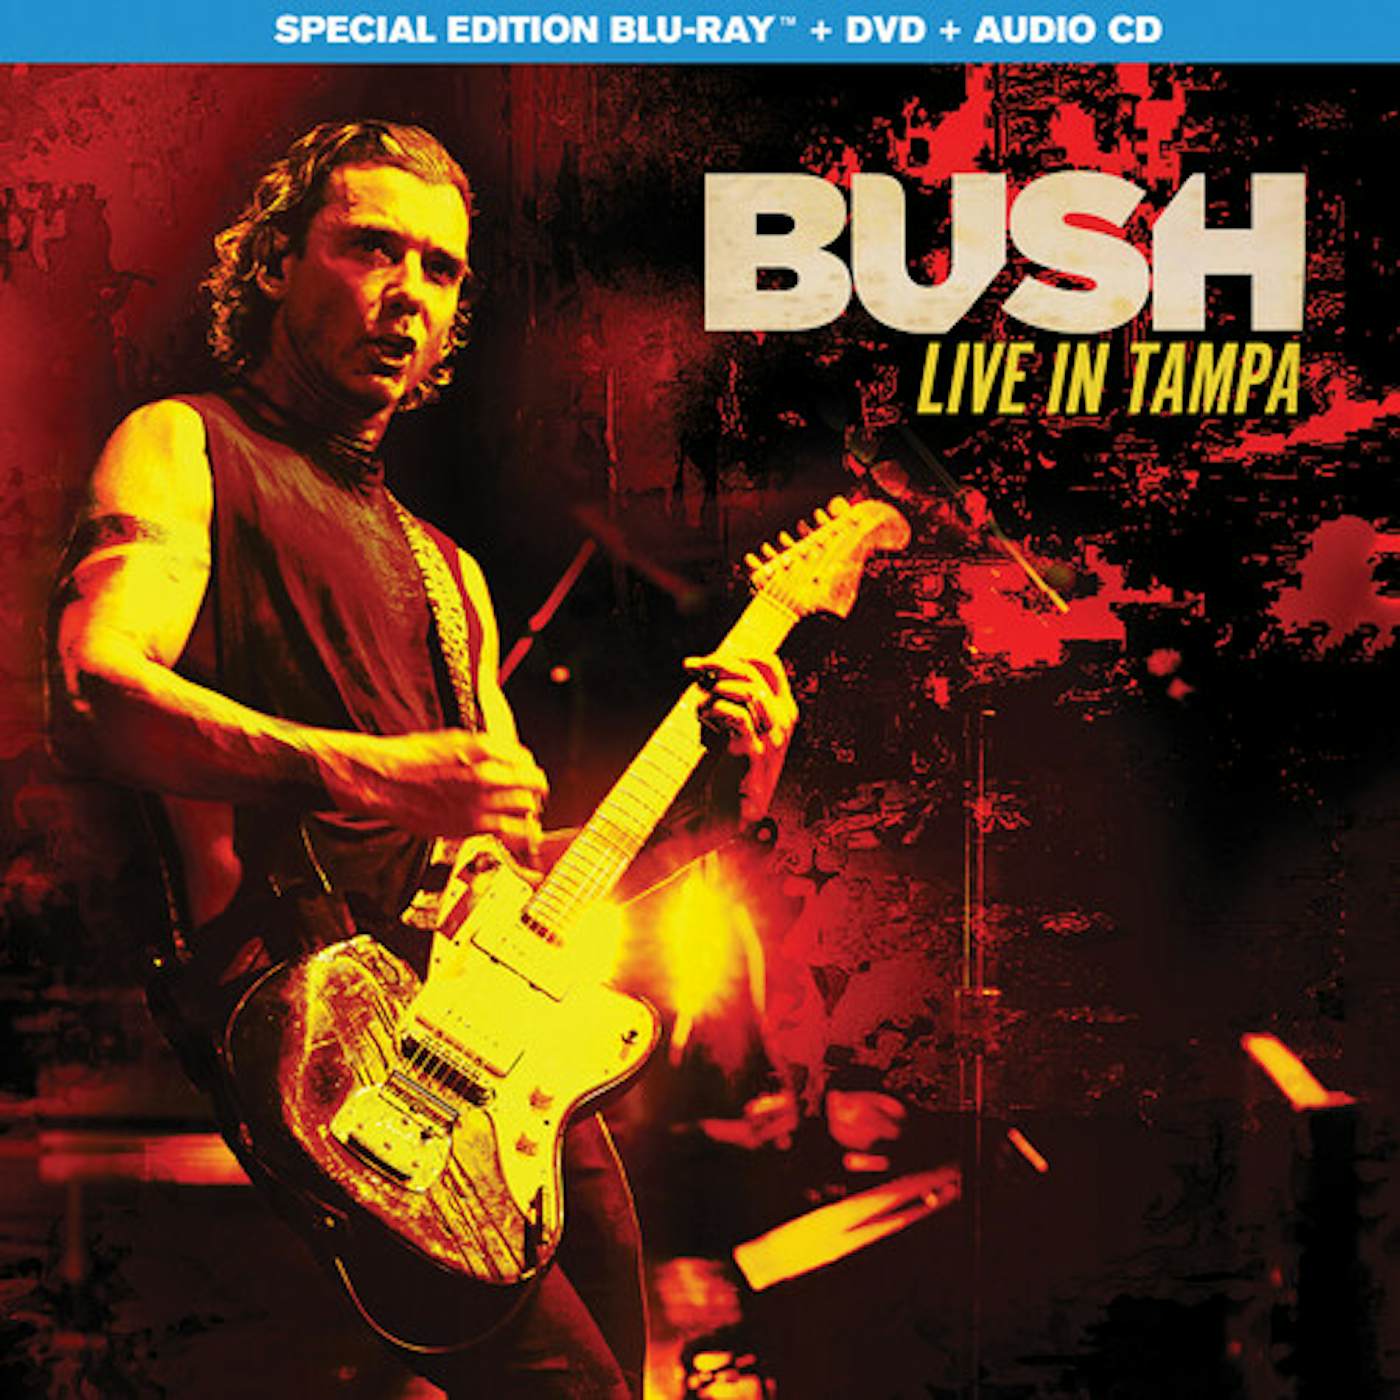 Bush LIVE IN TAMPA Blu-ray